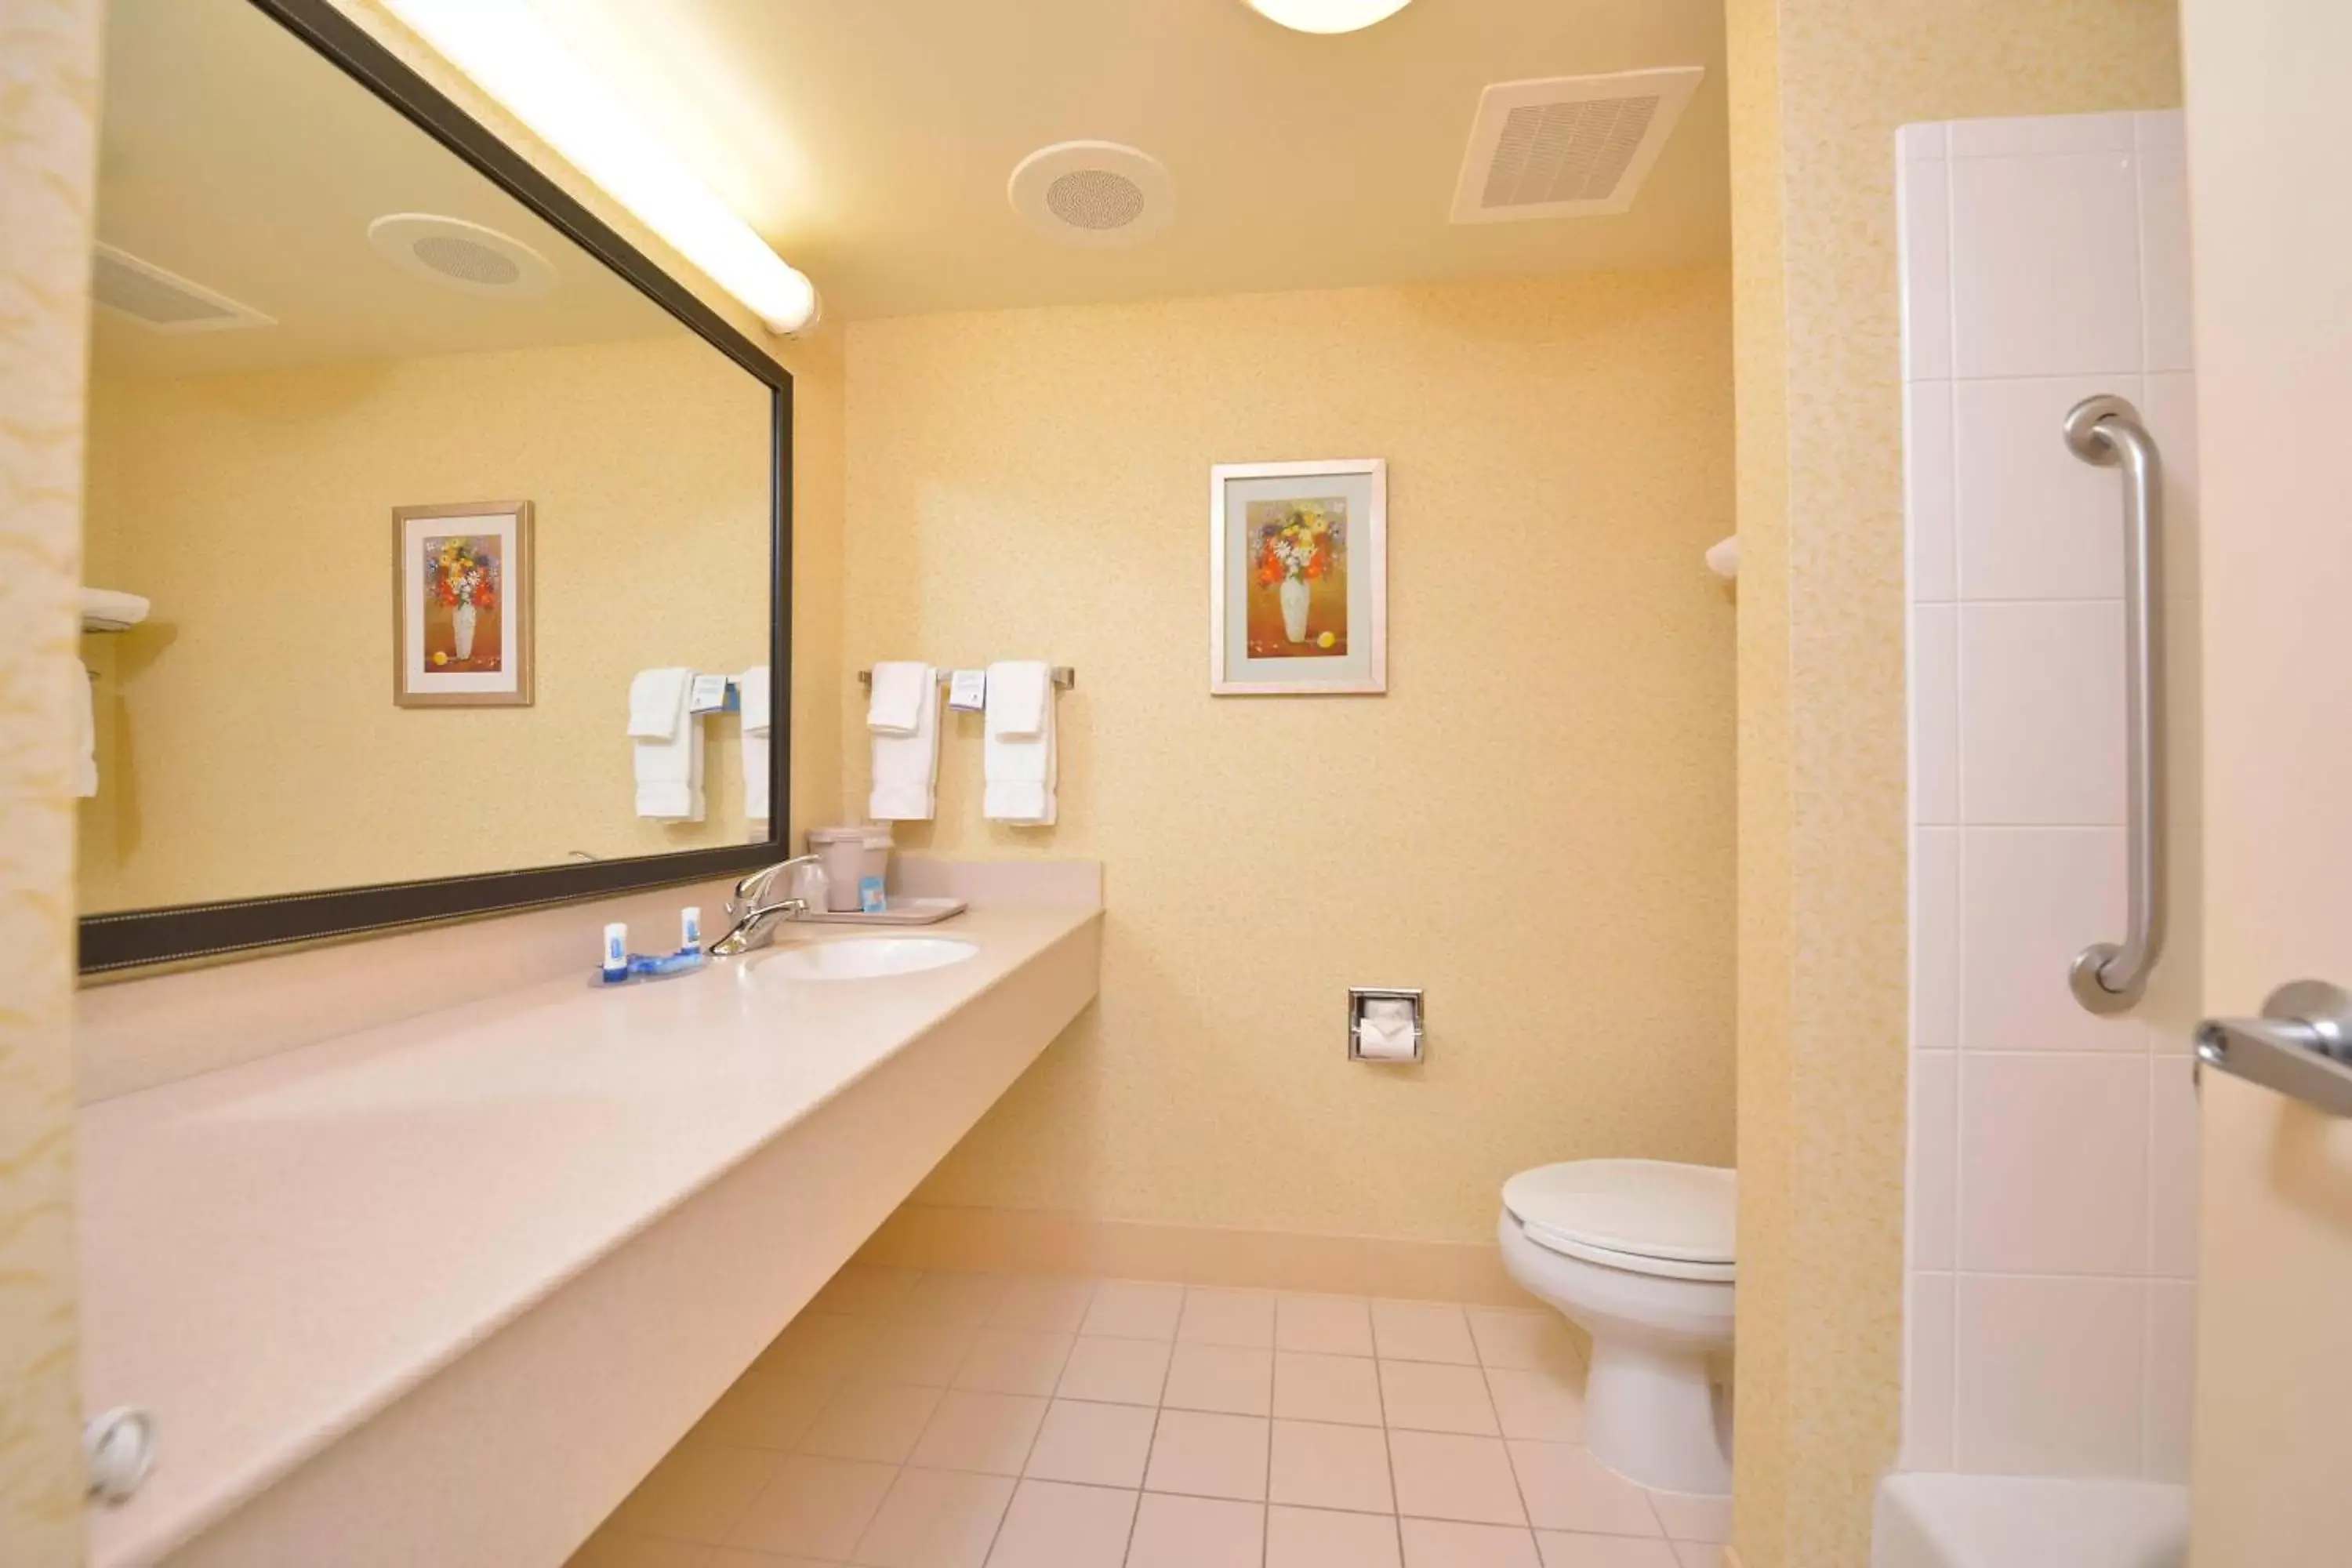 Bathroom in Fairfield Inn and Suites by Marriott Williamsport